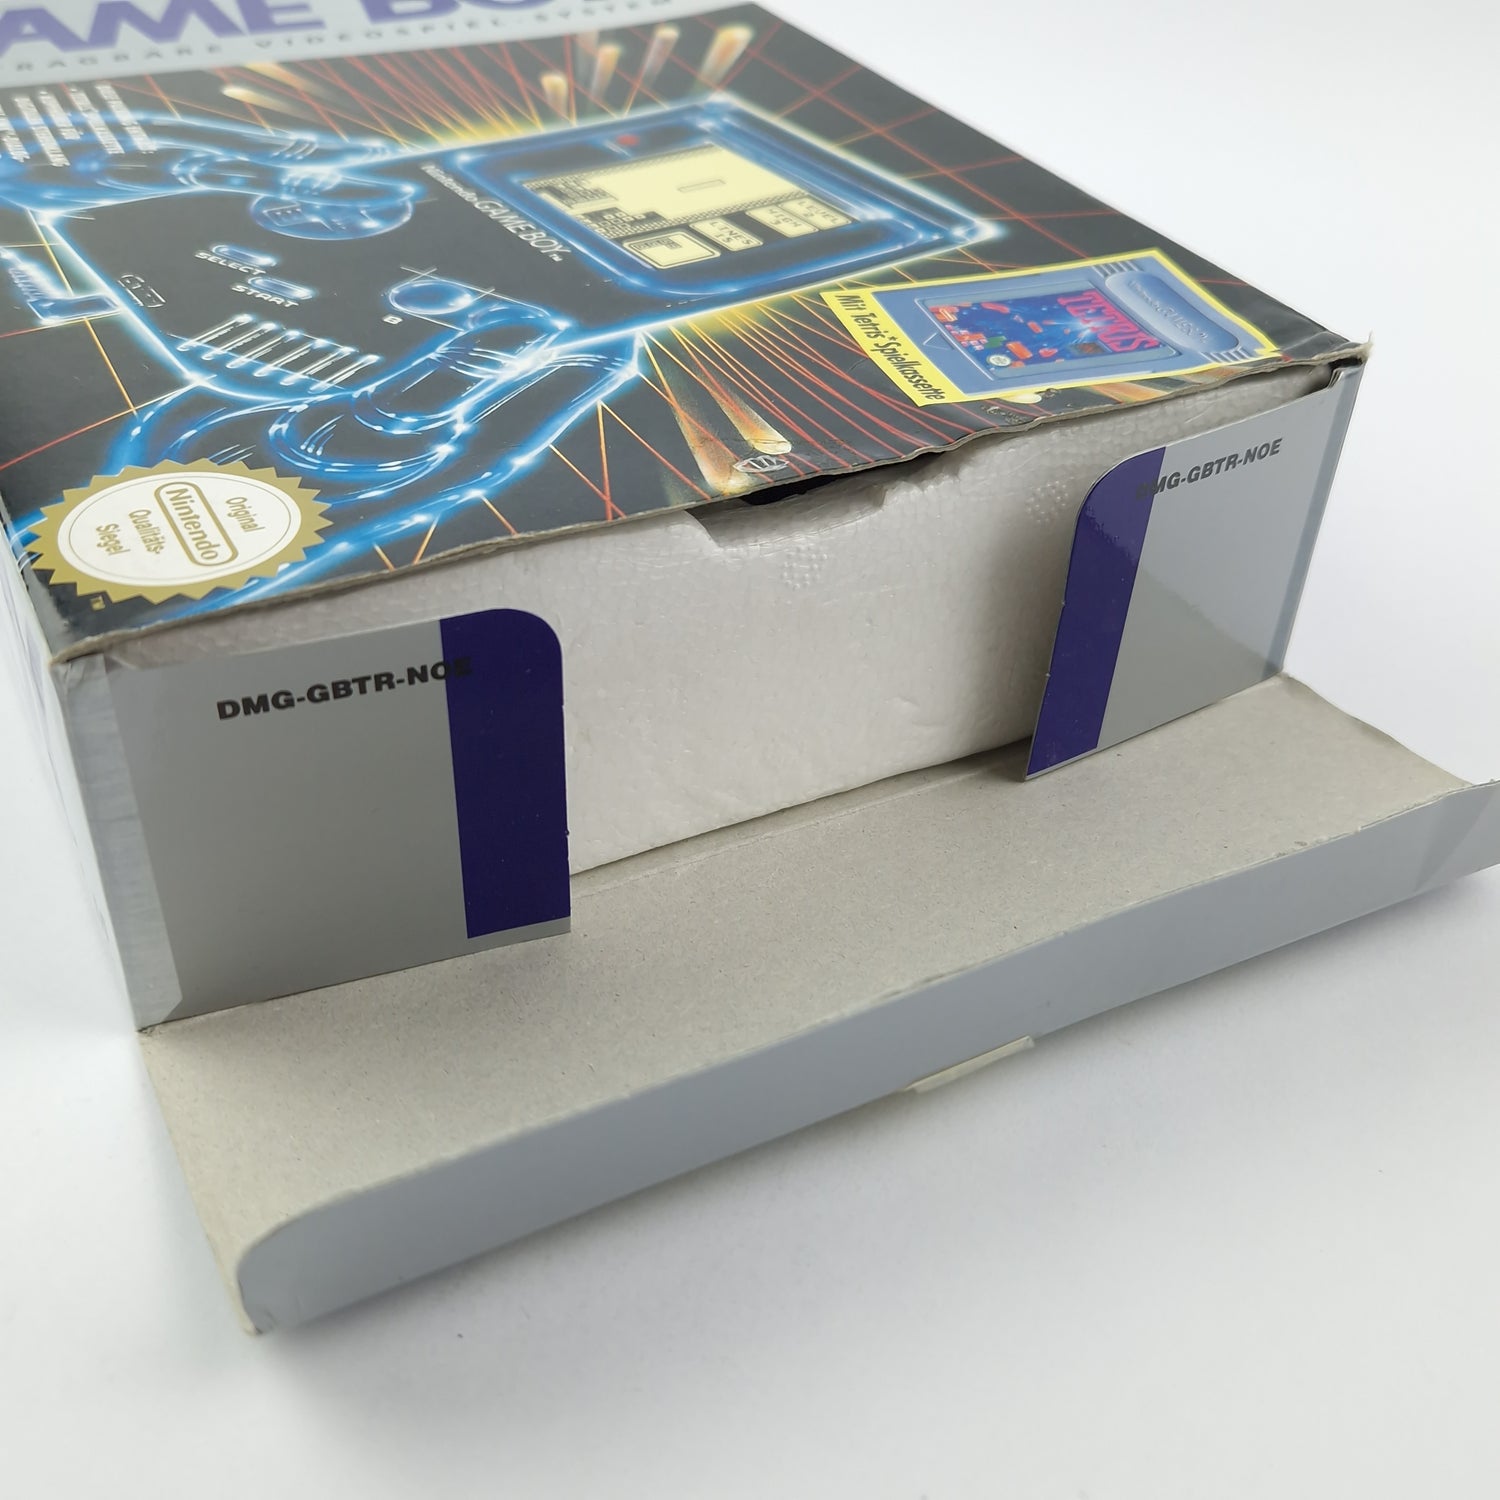 Nintendo Game Boy Classic Konsole in OVP + Super Mario Land - Bundle GAMEBOY